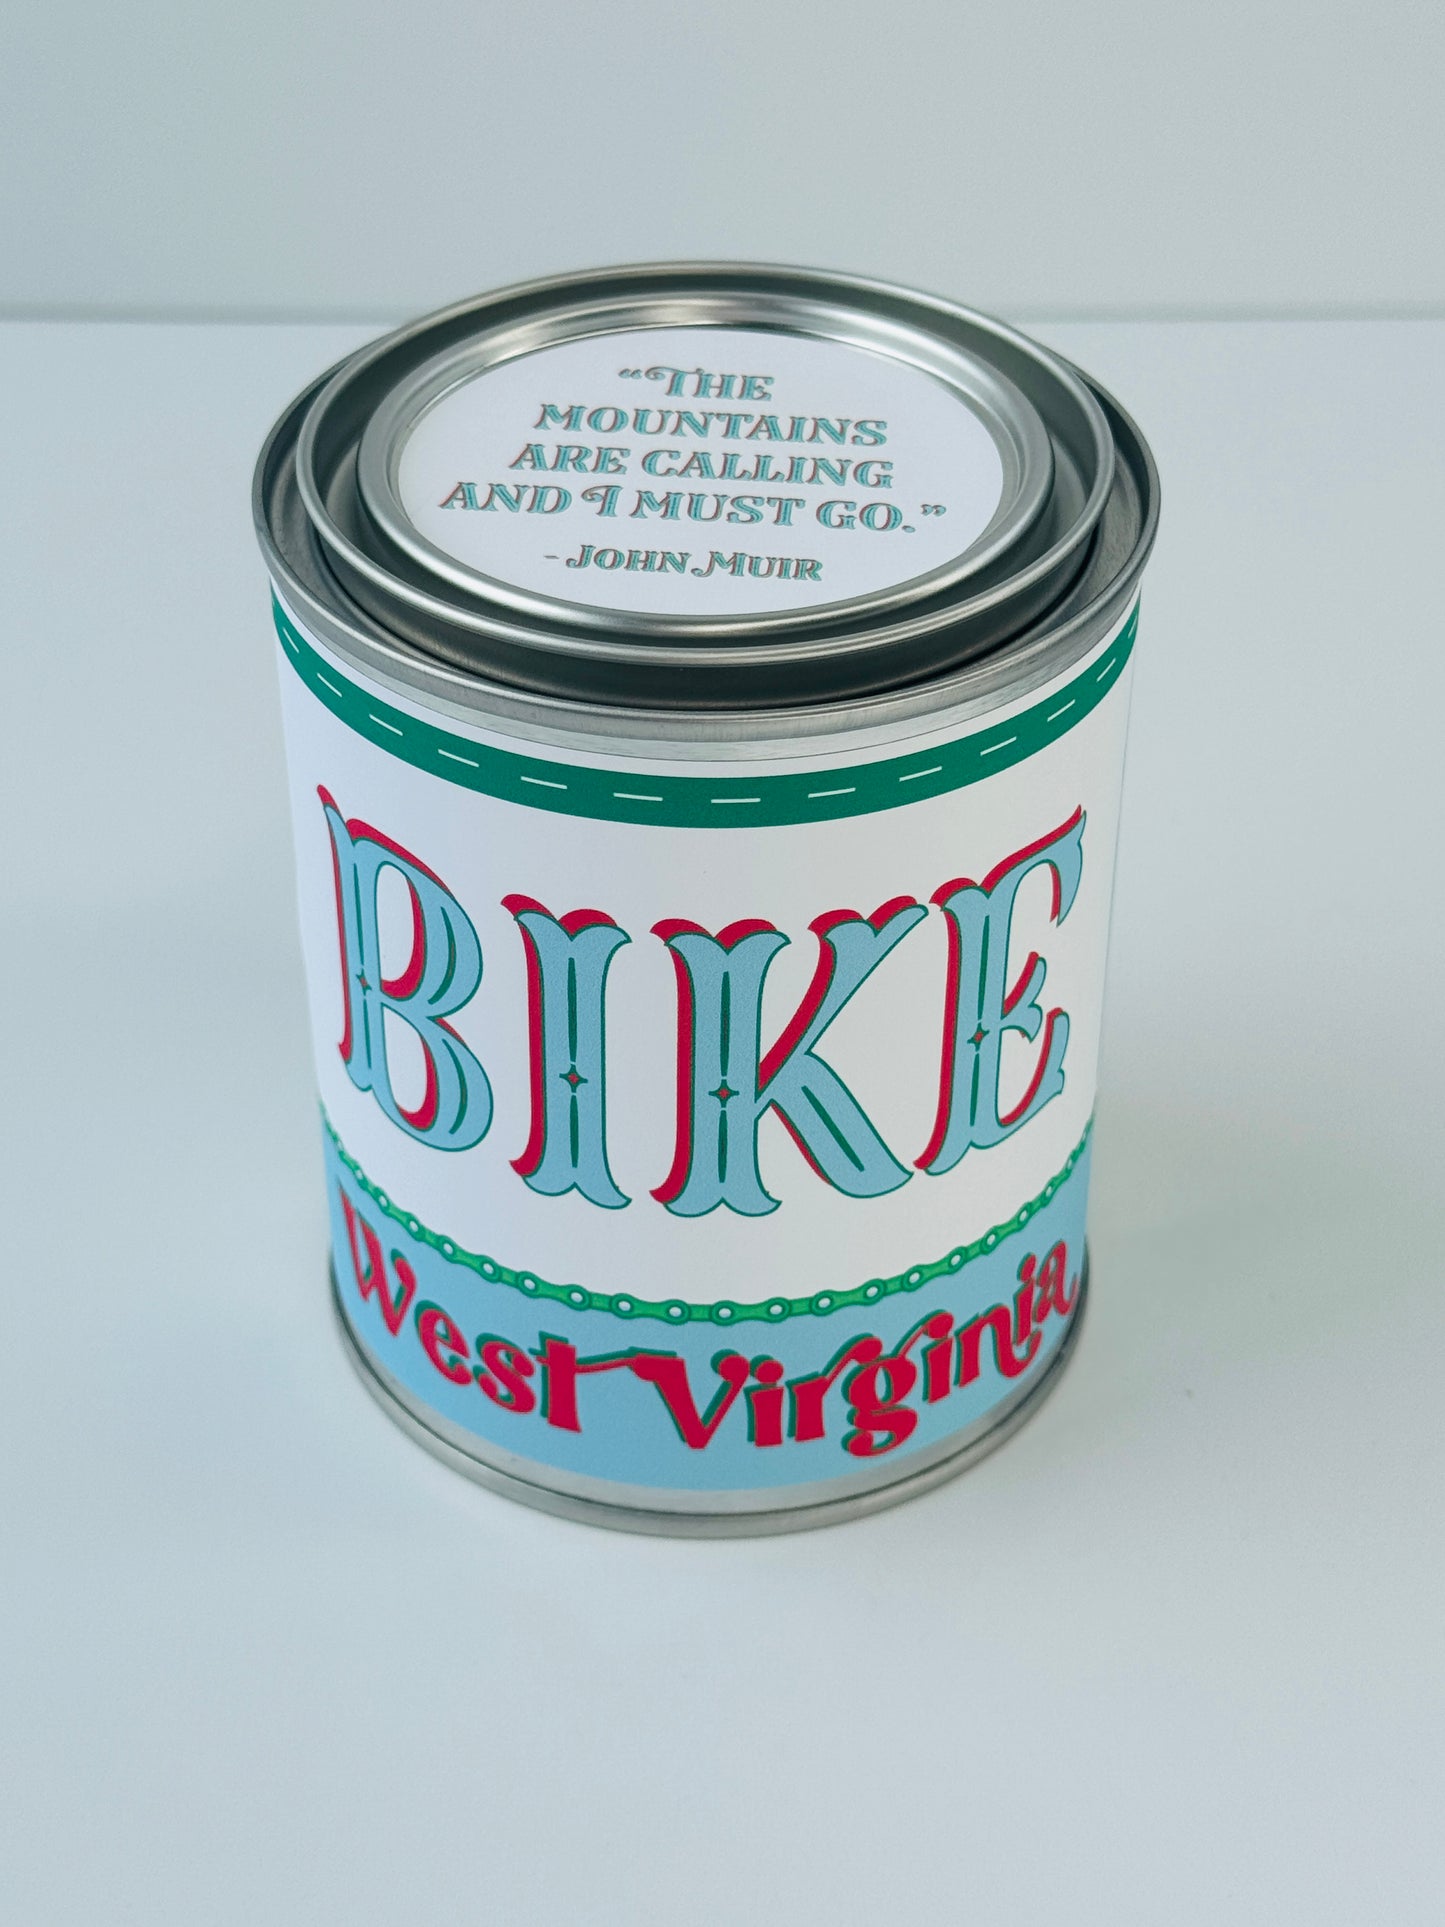 Bike West Virginia - Paint Tin Candle